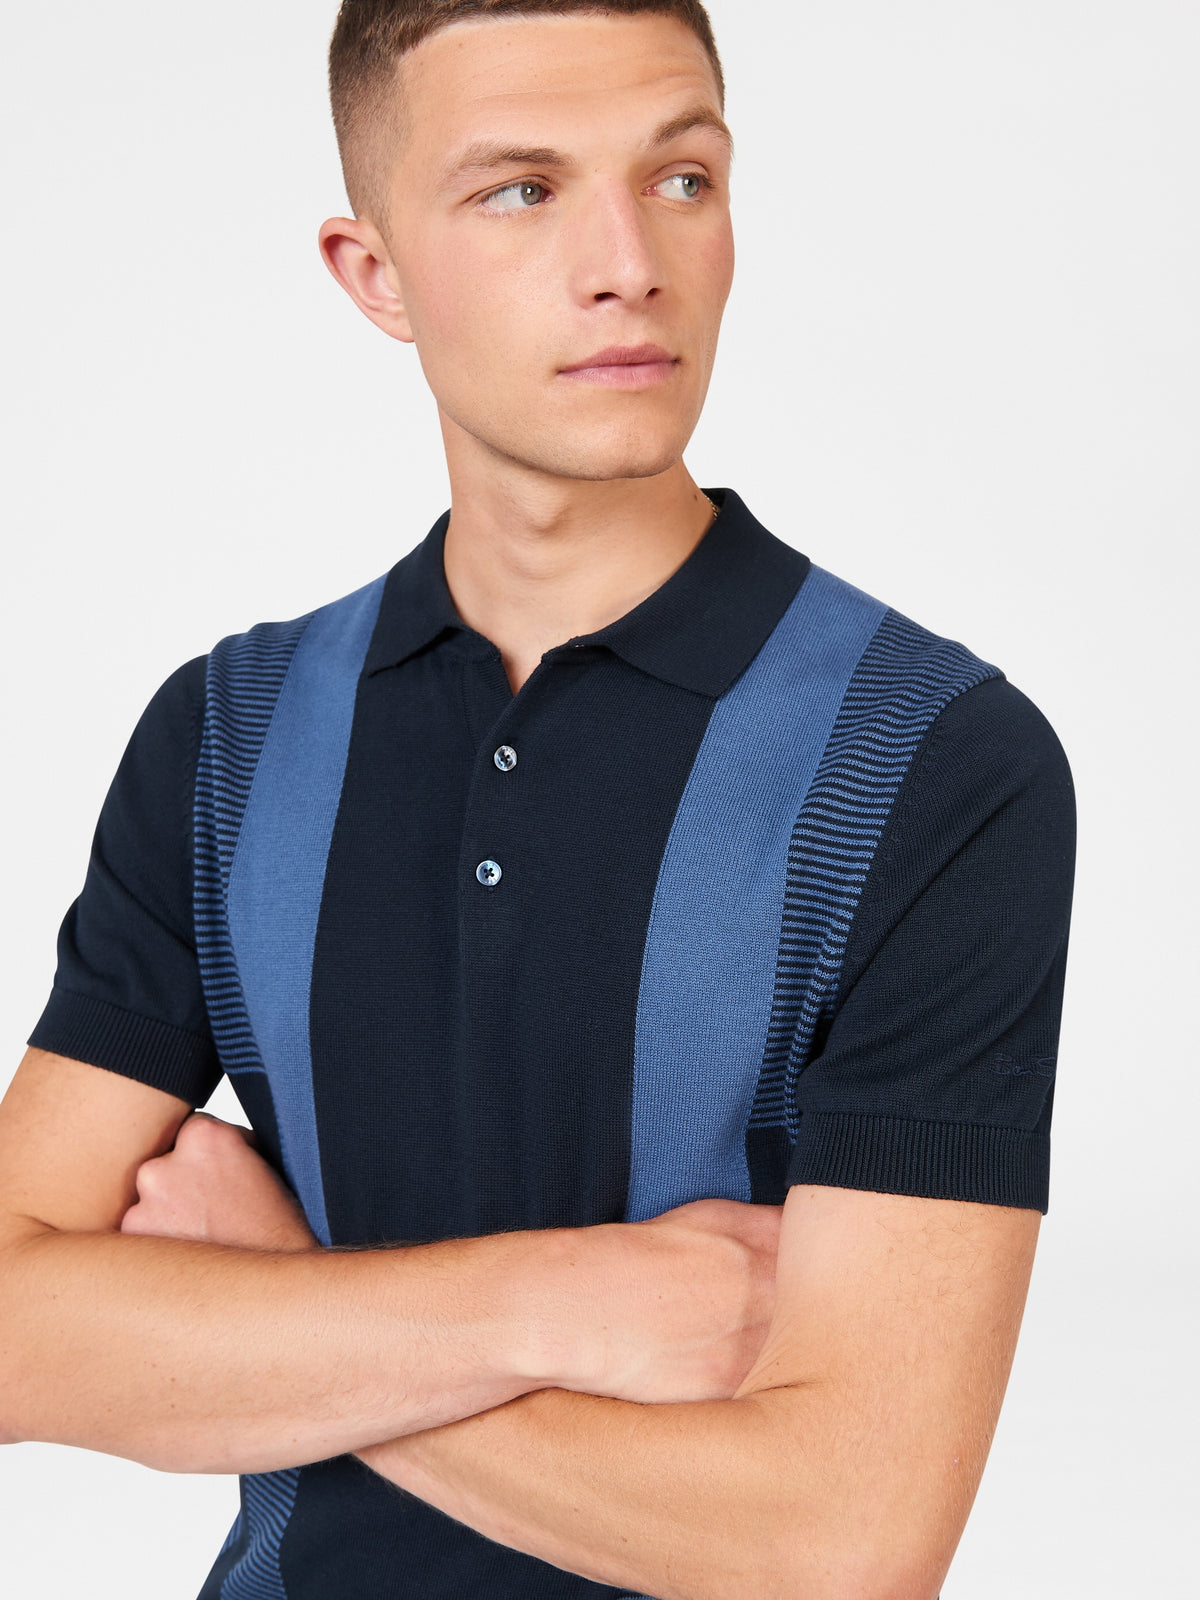 Ben Sherman Mens Inarsia Stripe Knit Polo Shirt, 02, 74196, Dark Navy